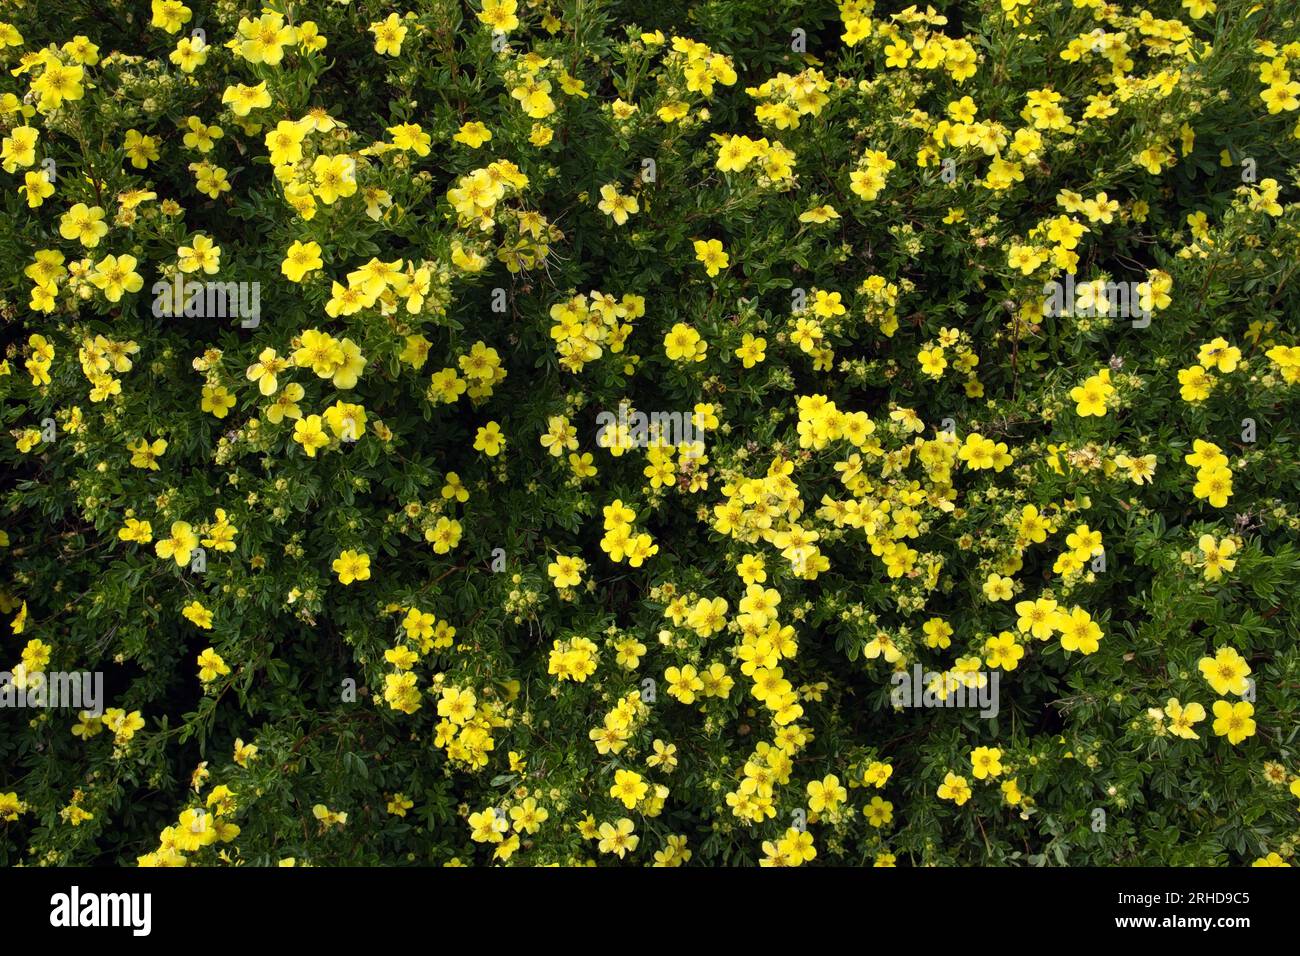 potentilla, yellow flowering shrub blooming Stock Photo